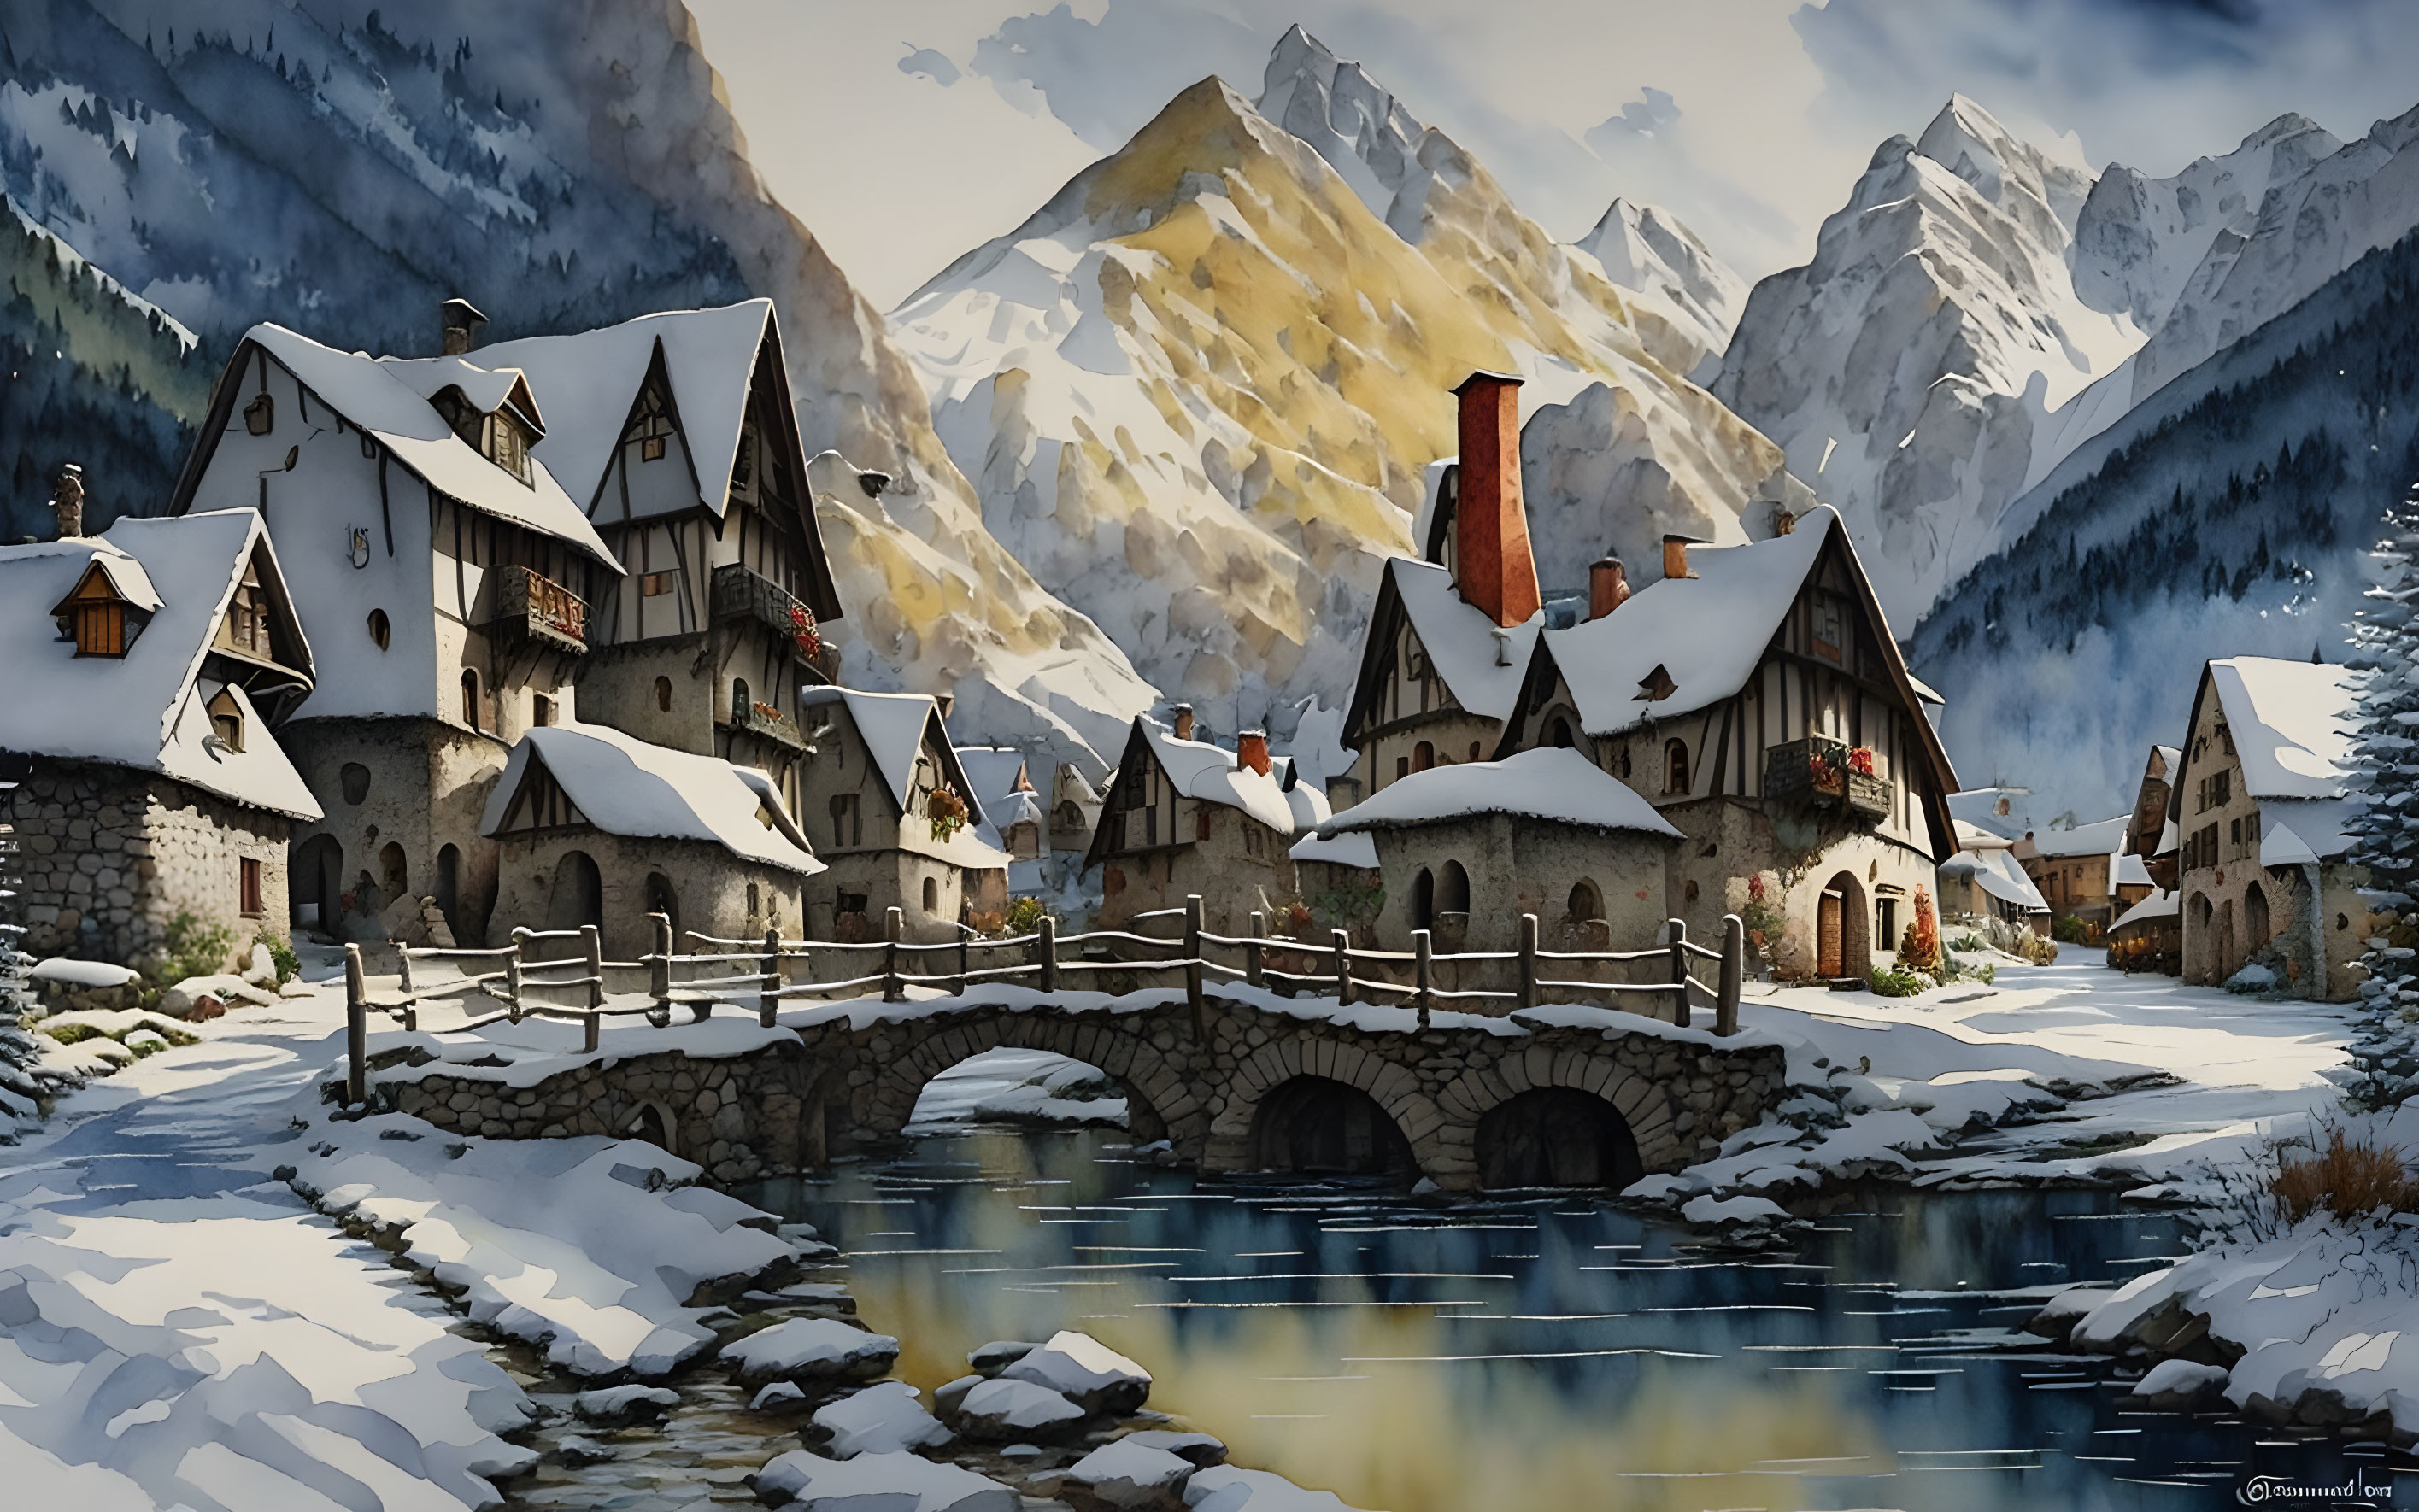 Snow-covered cottages, stone bridge, mountains: Winter village scene.